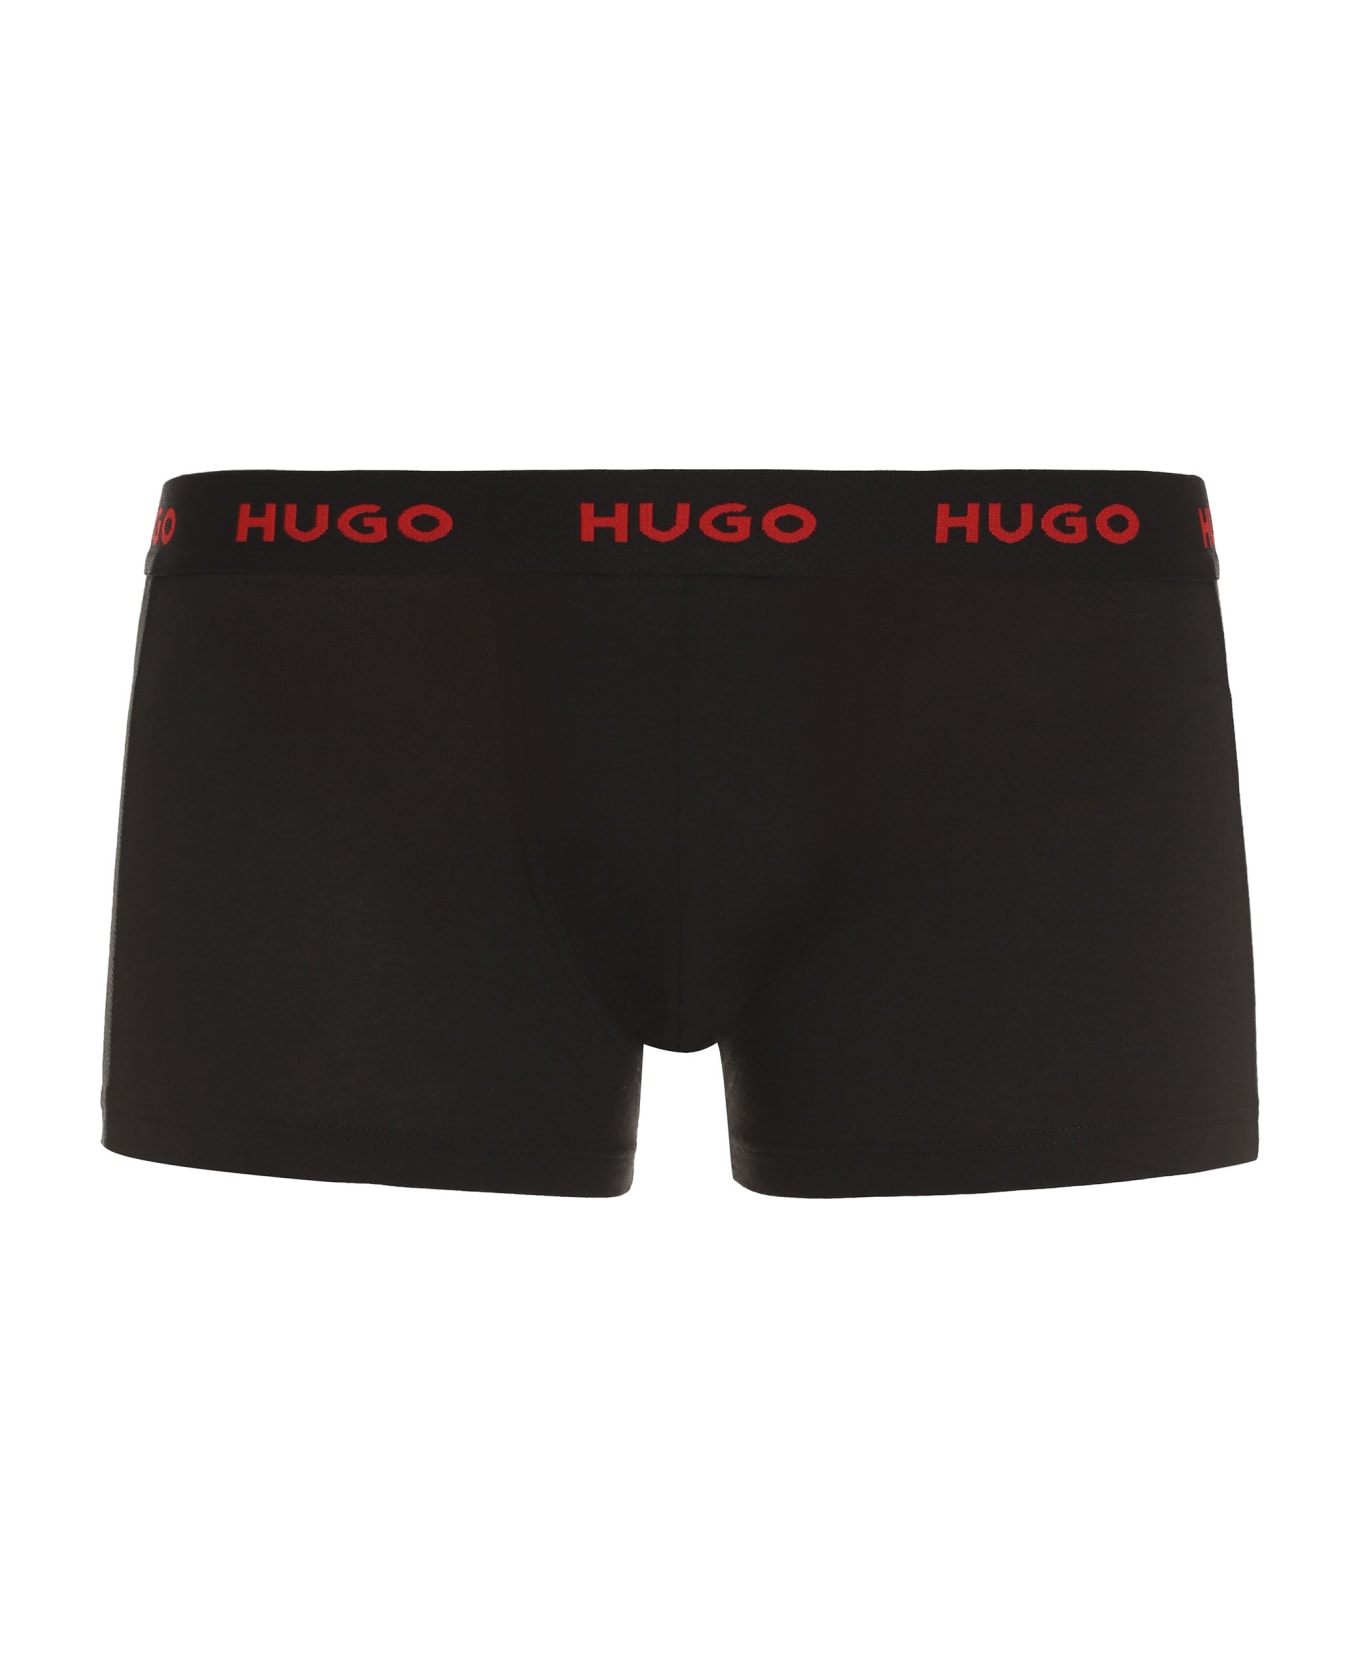 Hugo Boss Set Of Three Boxers - black